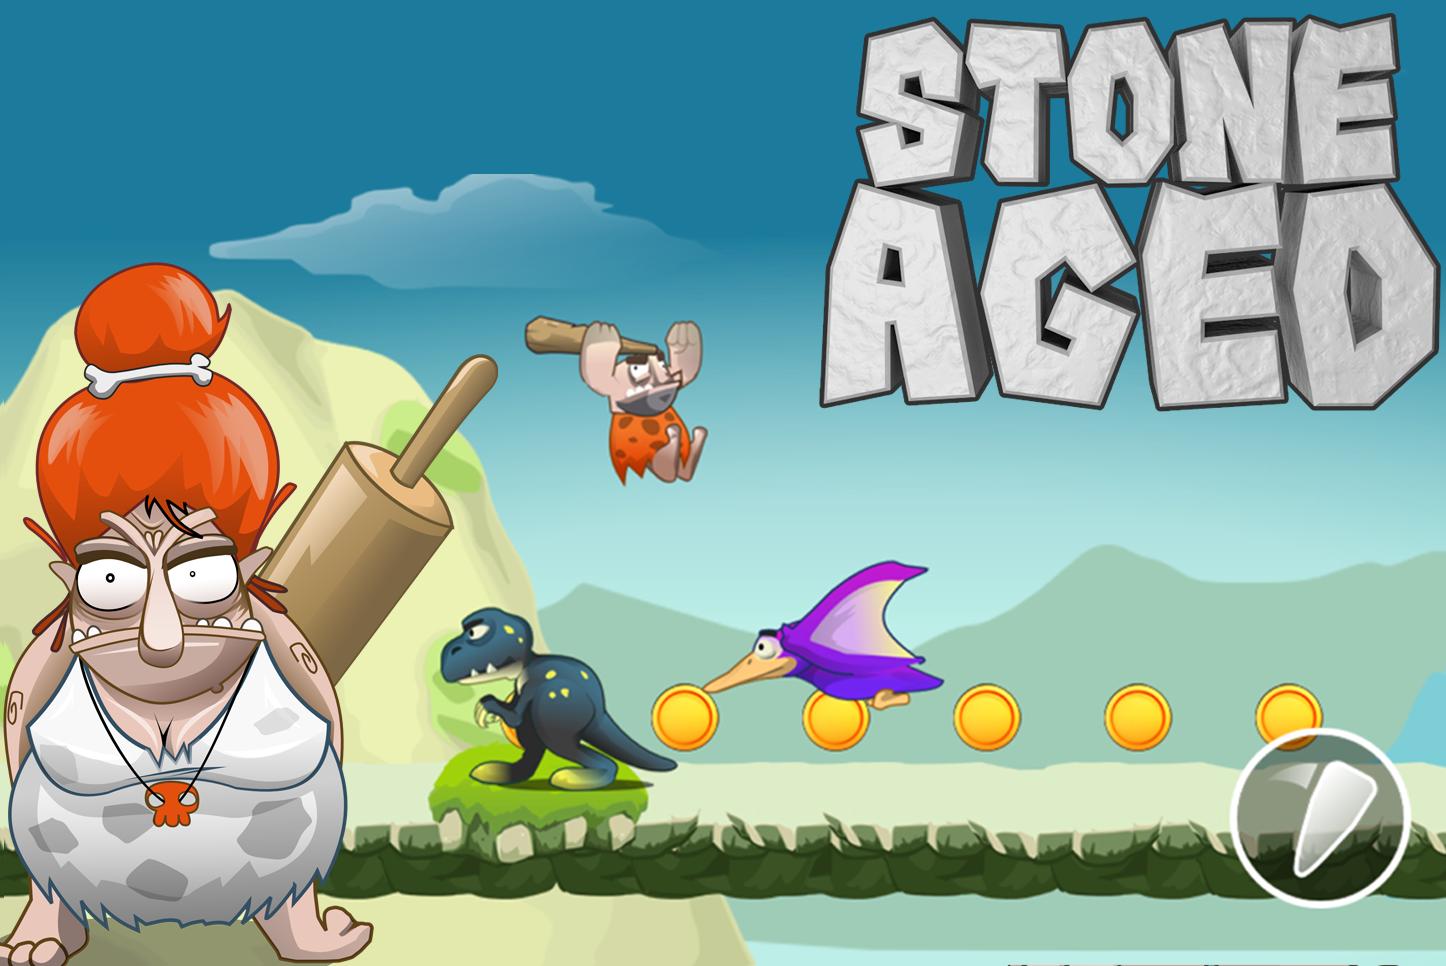 Running stone. Игра Stone. Каменный век игра. Stone age игра андроид. Stone age игра компьютерная.